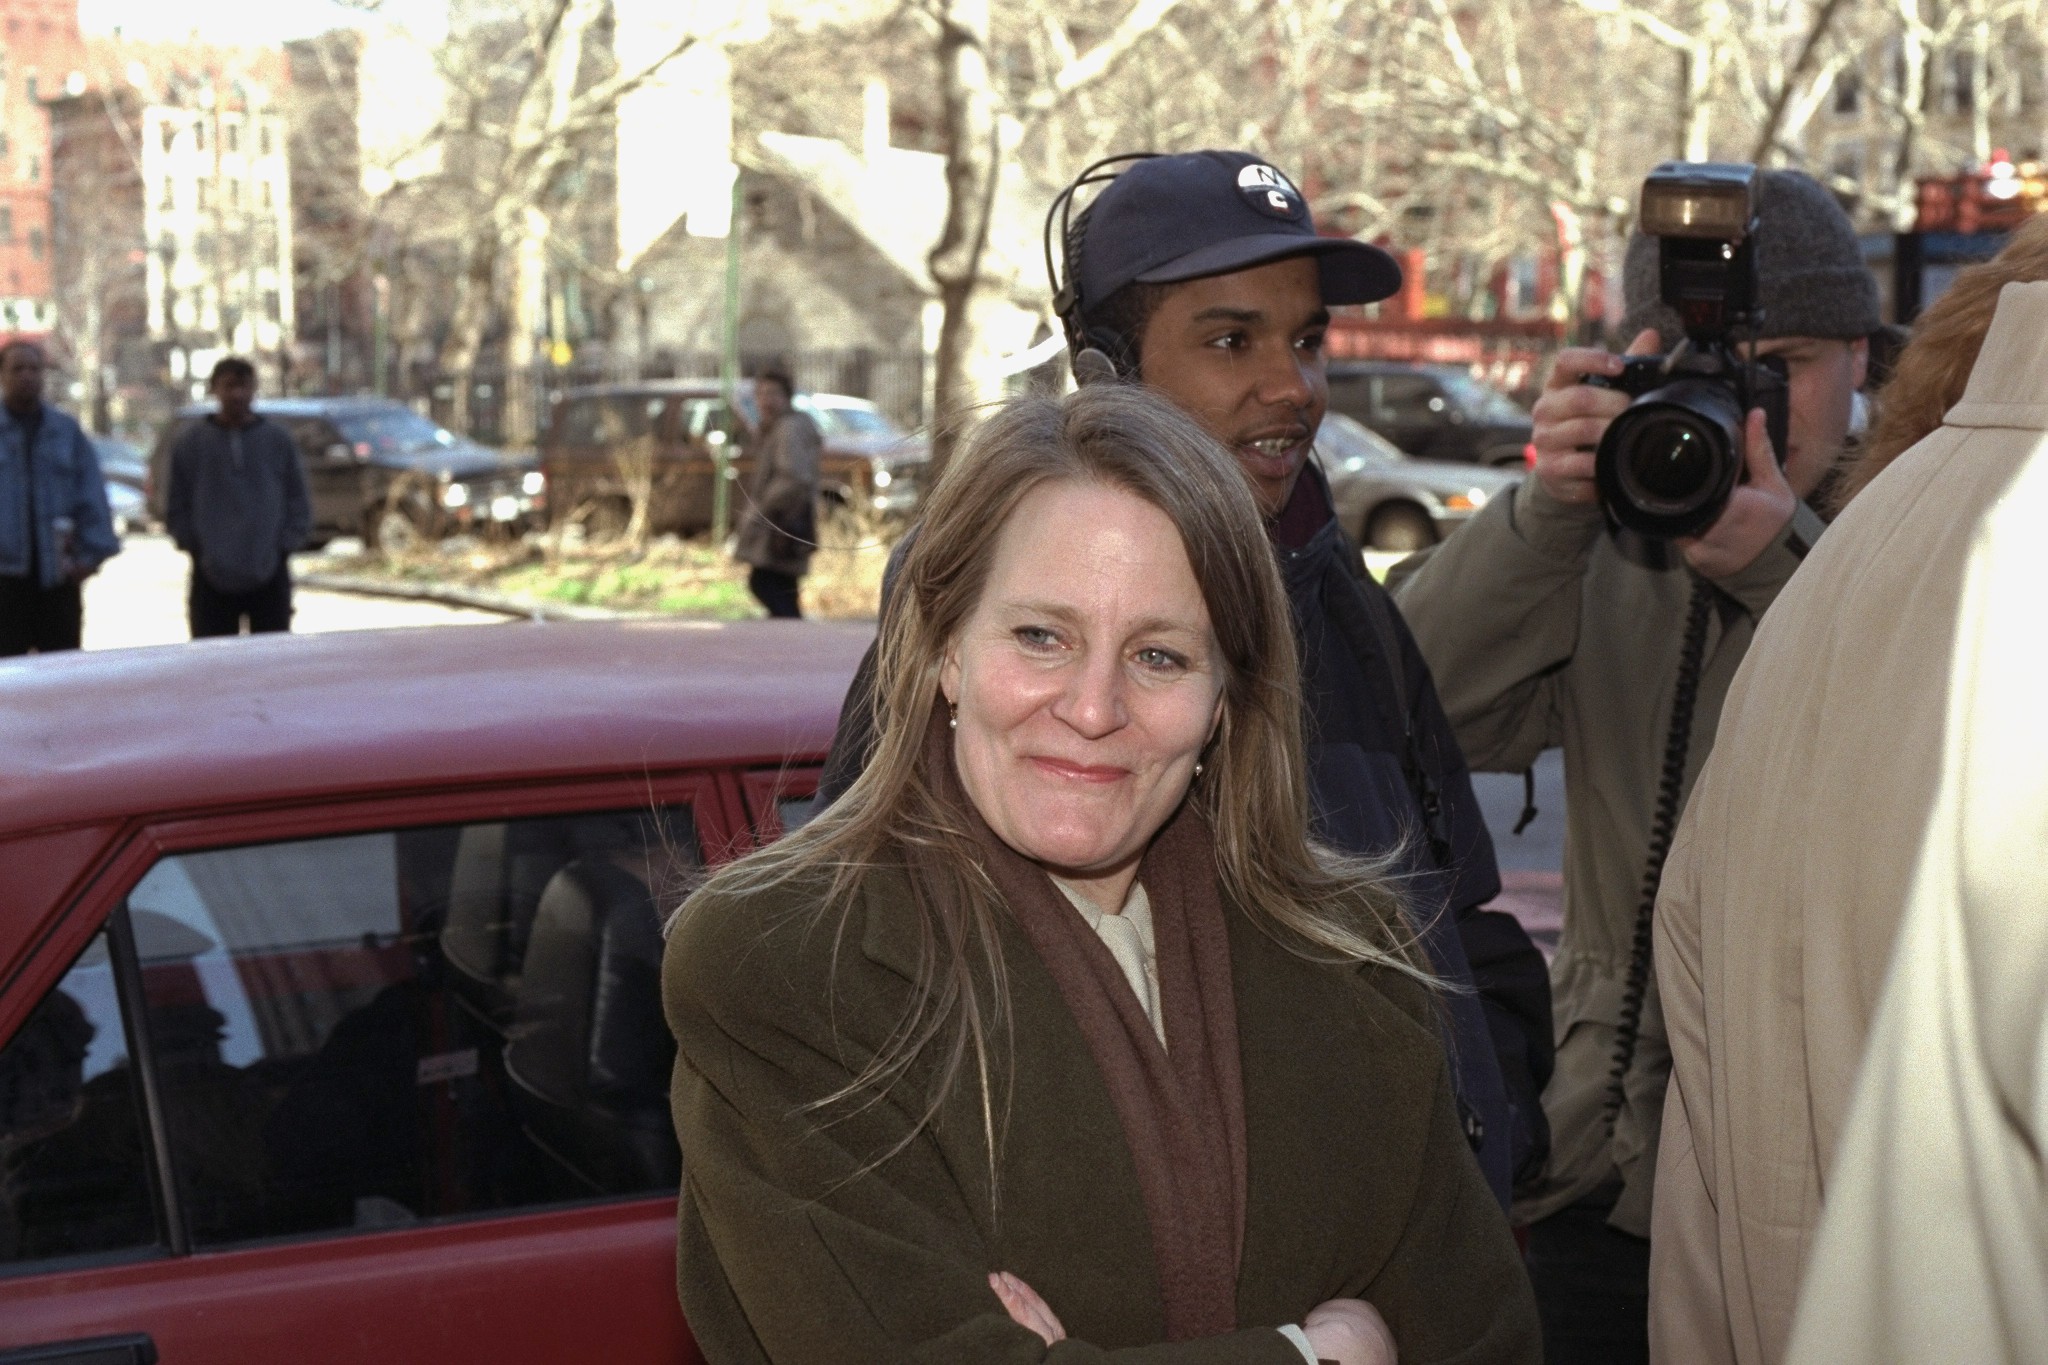 Patricia Brentrup am Supreme Court in Lower Manhattan, New York City am 1. April 1997 | Quelle: Getty Images